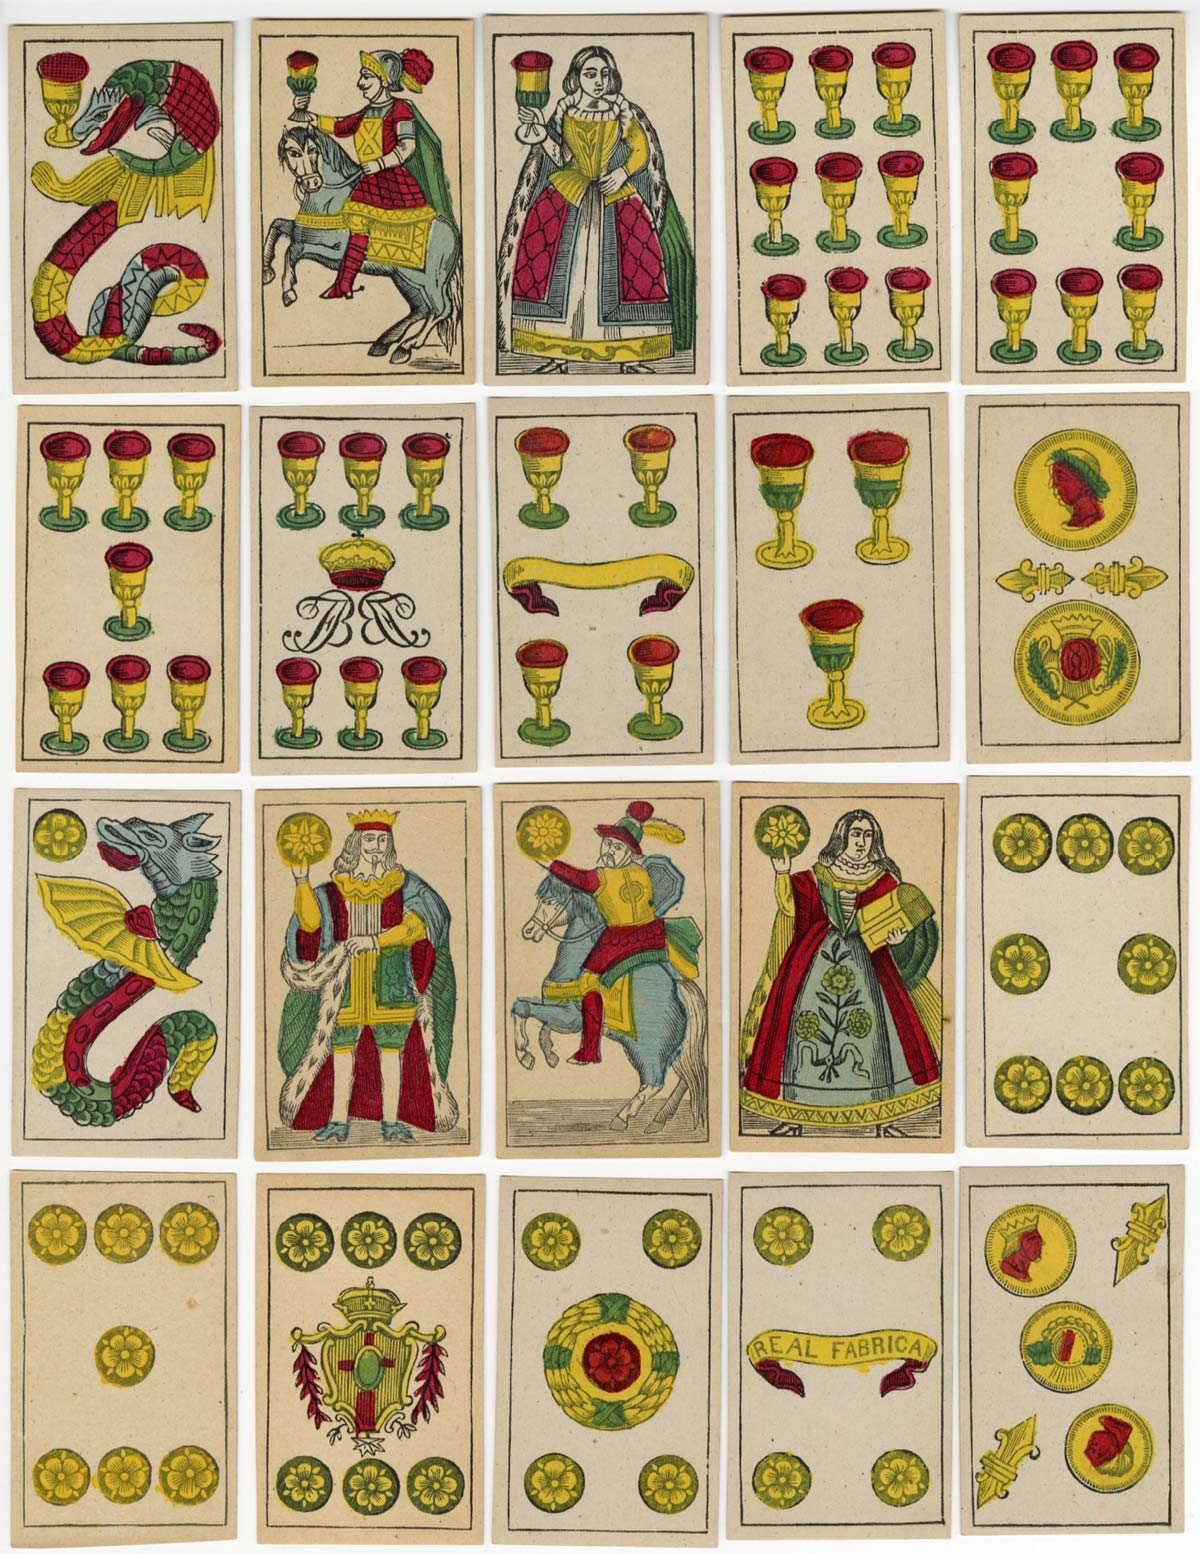 Portuguezas N°2, Léonard Biermans, 1878, National Playing Card Museum, Turnhout